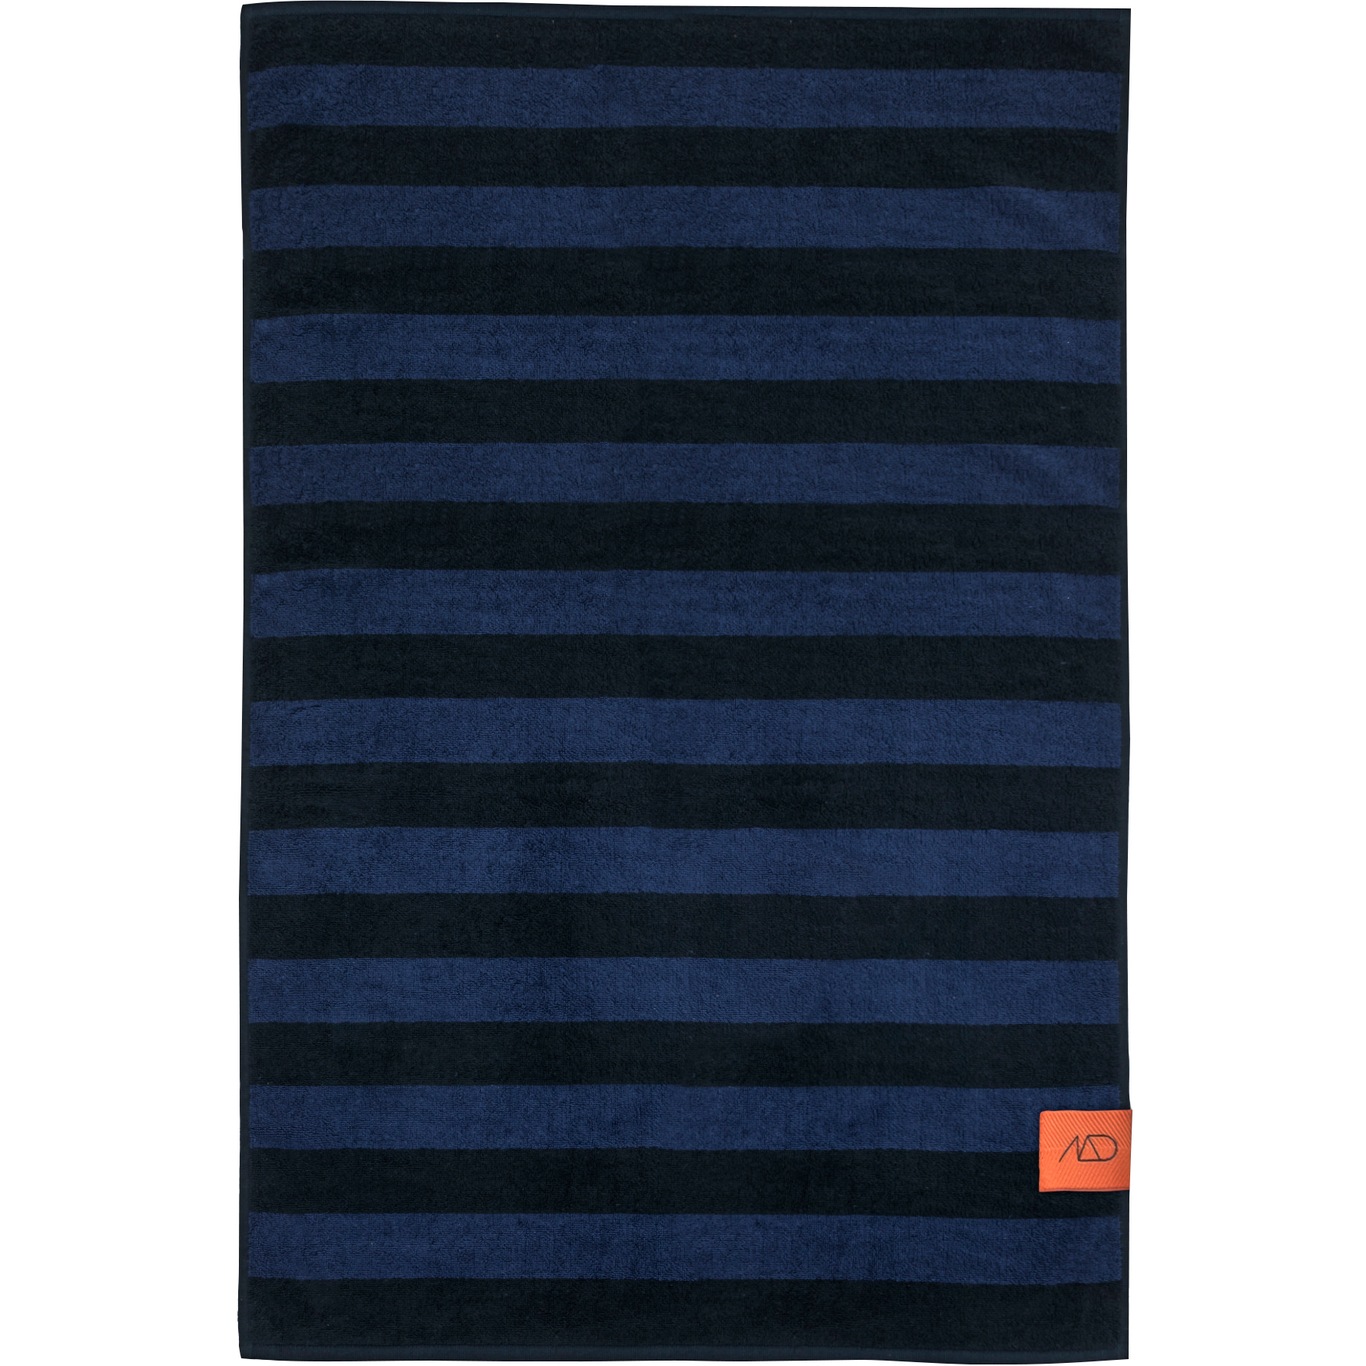 Aros Handduk Midnight Blue 2-pack, 35x55 cm